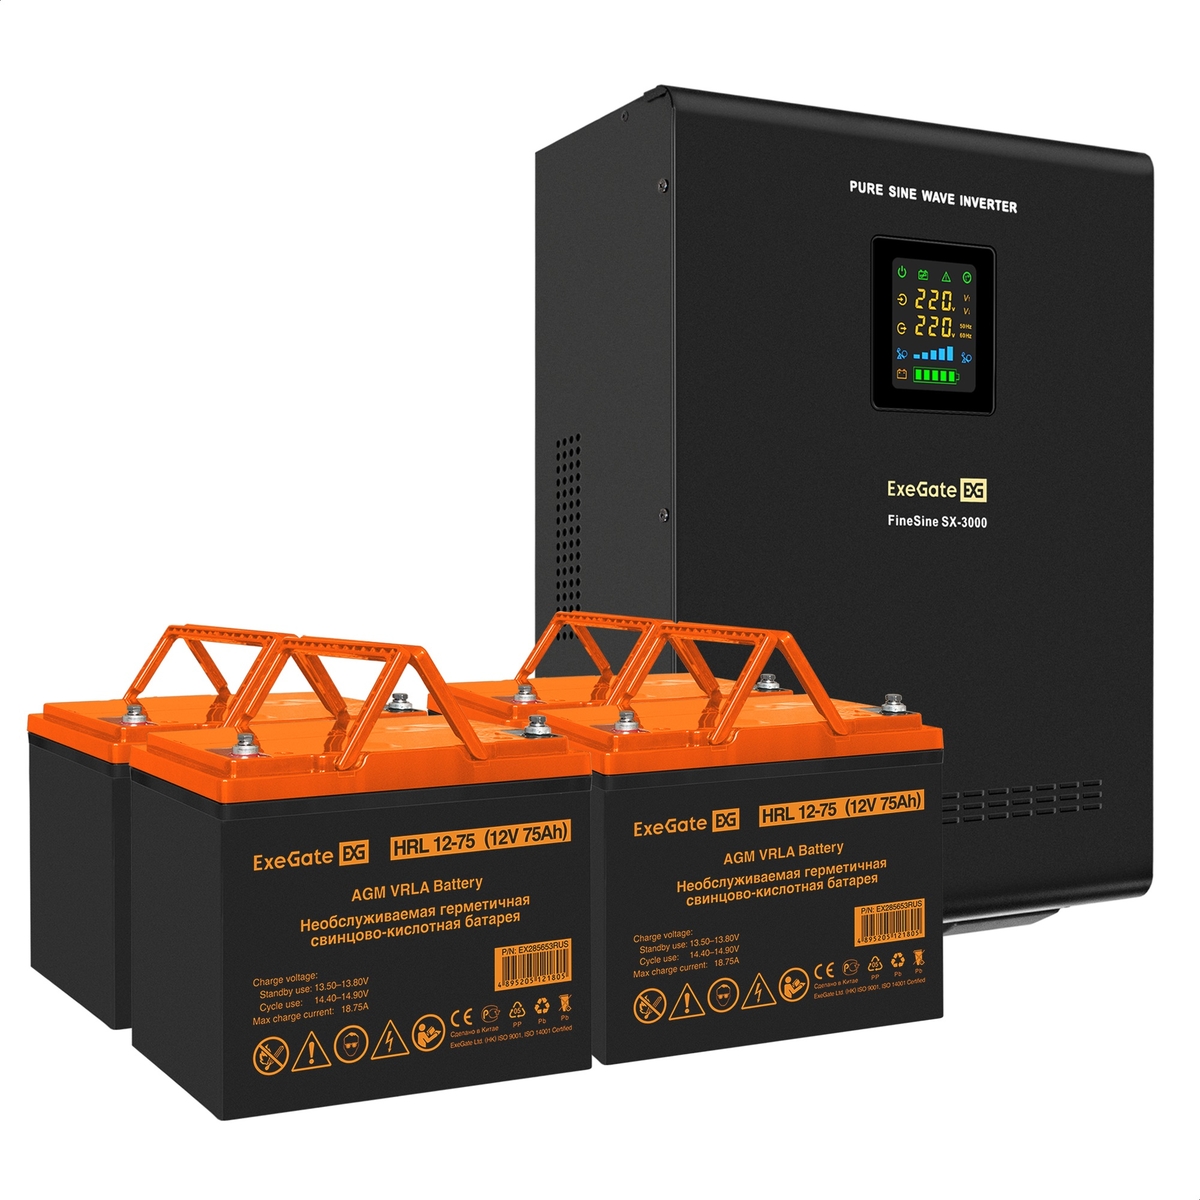 UPS set EX296003 + battery 75Ah EX285653 4 piece